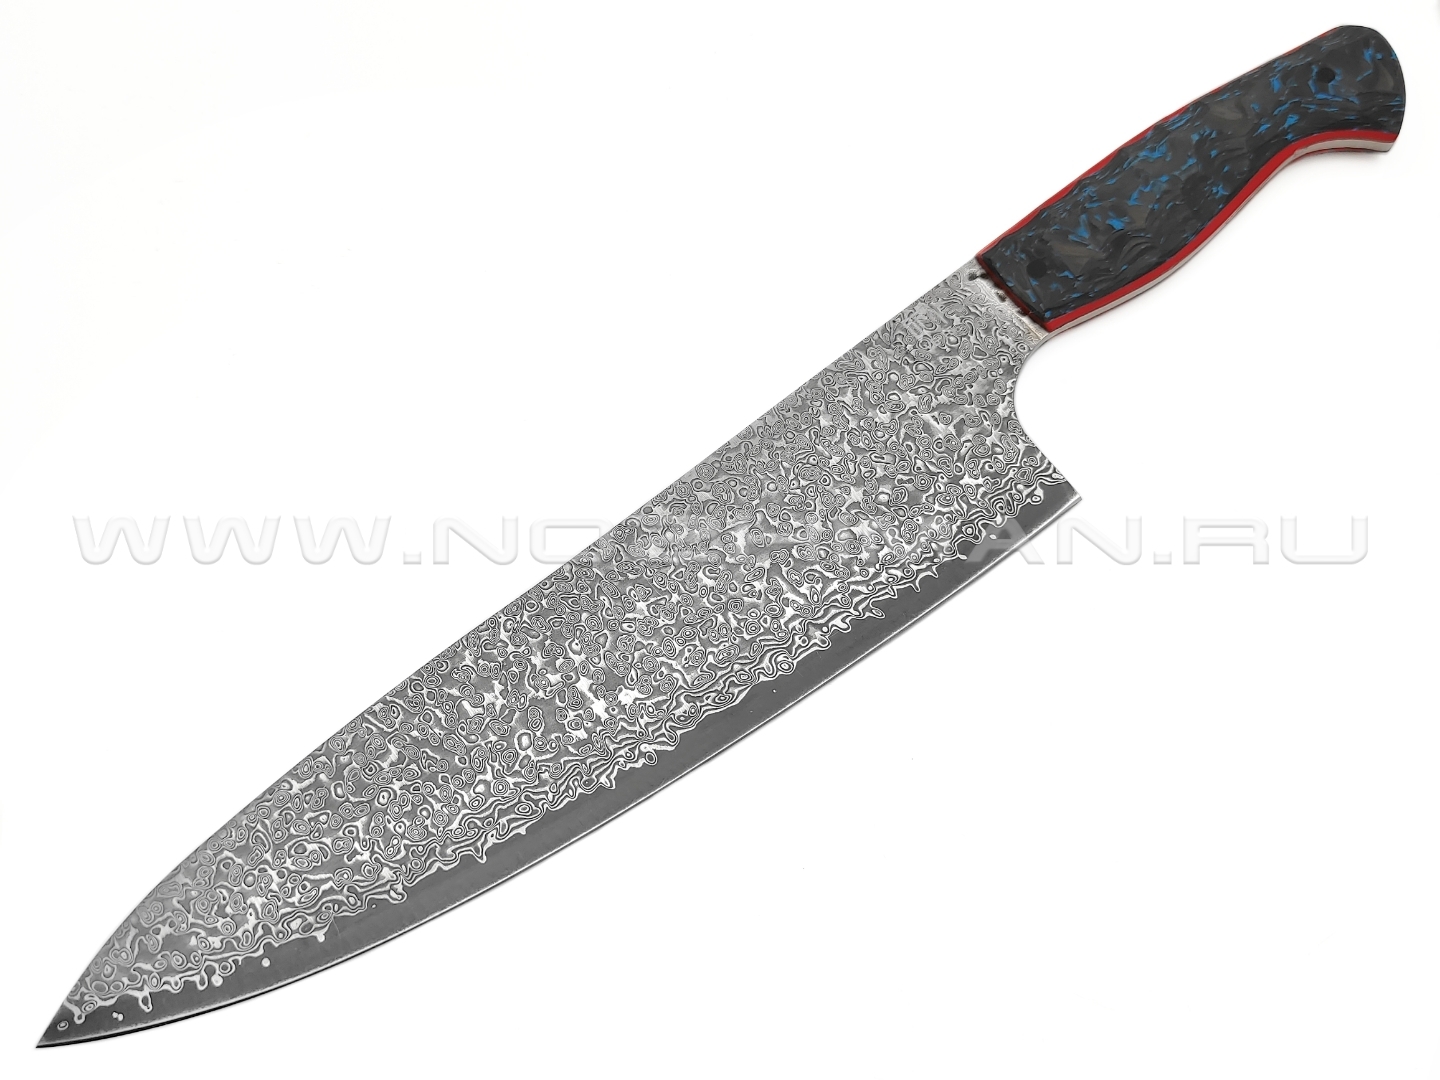 BRK шеф нож Кипучий сталь Laminated VG10 & Damascus, рукоять Carbon fiber blue, G10 red